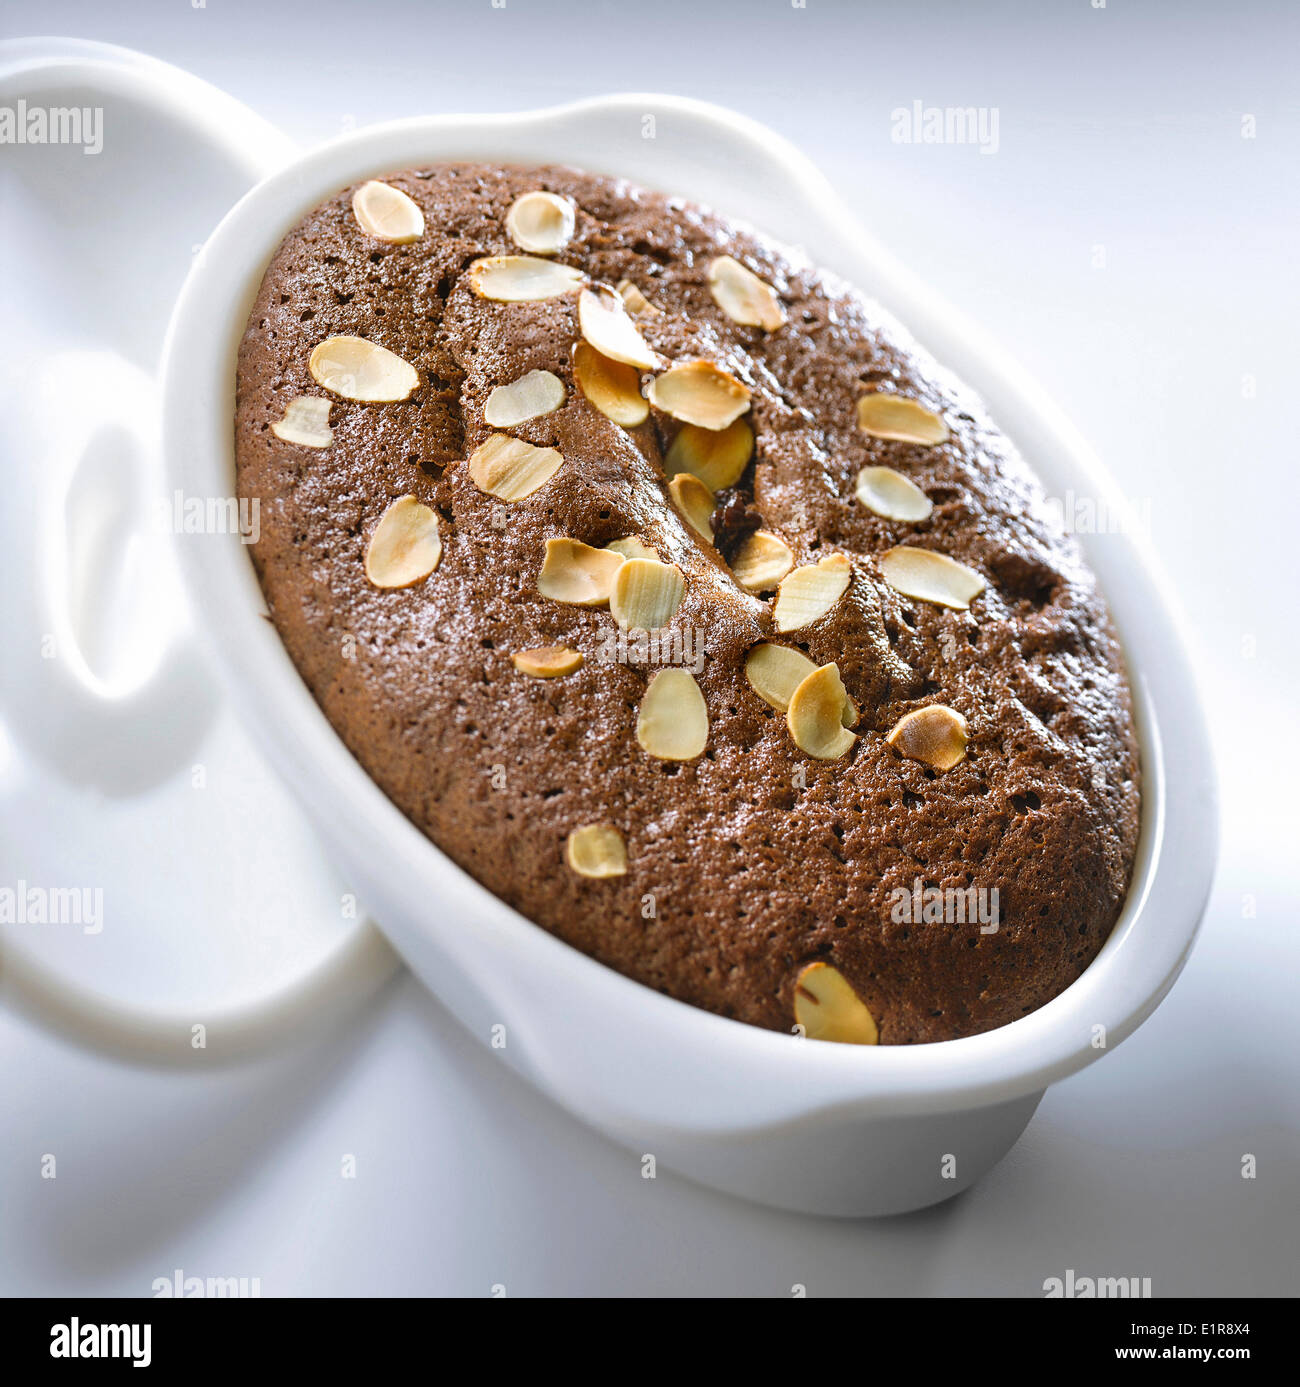 Chocolate and almond fondant Stock Photo